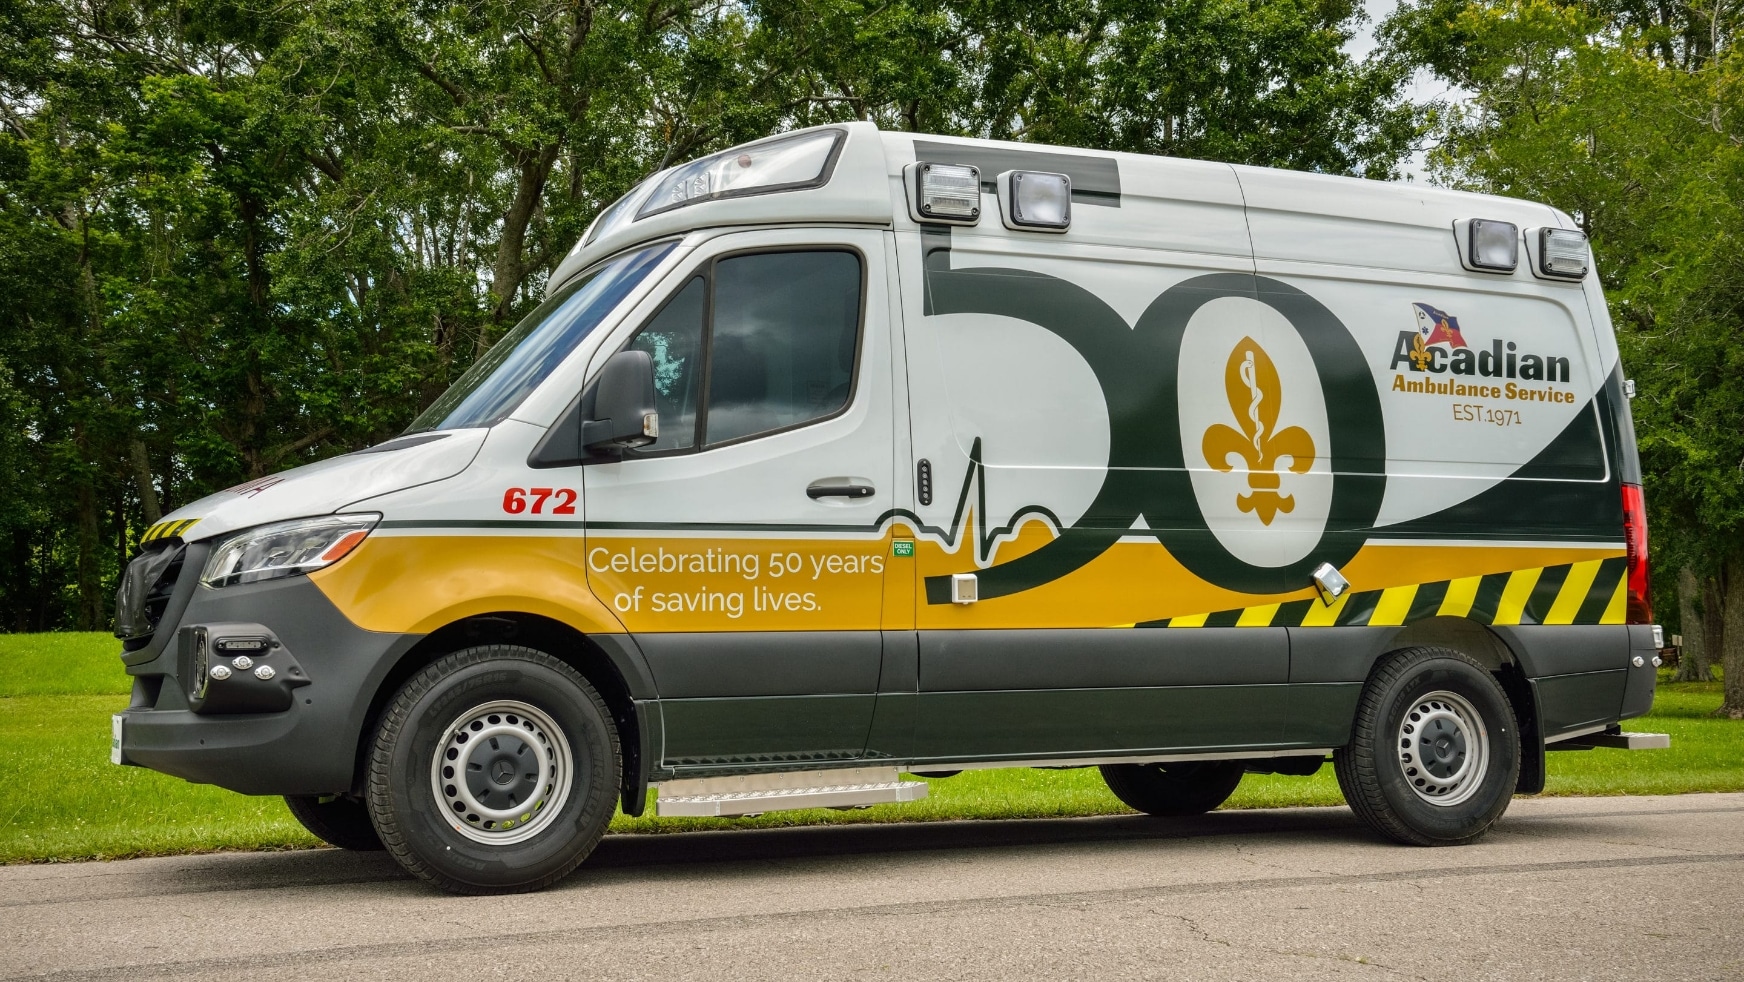 Acadian Ambulance van